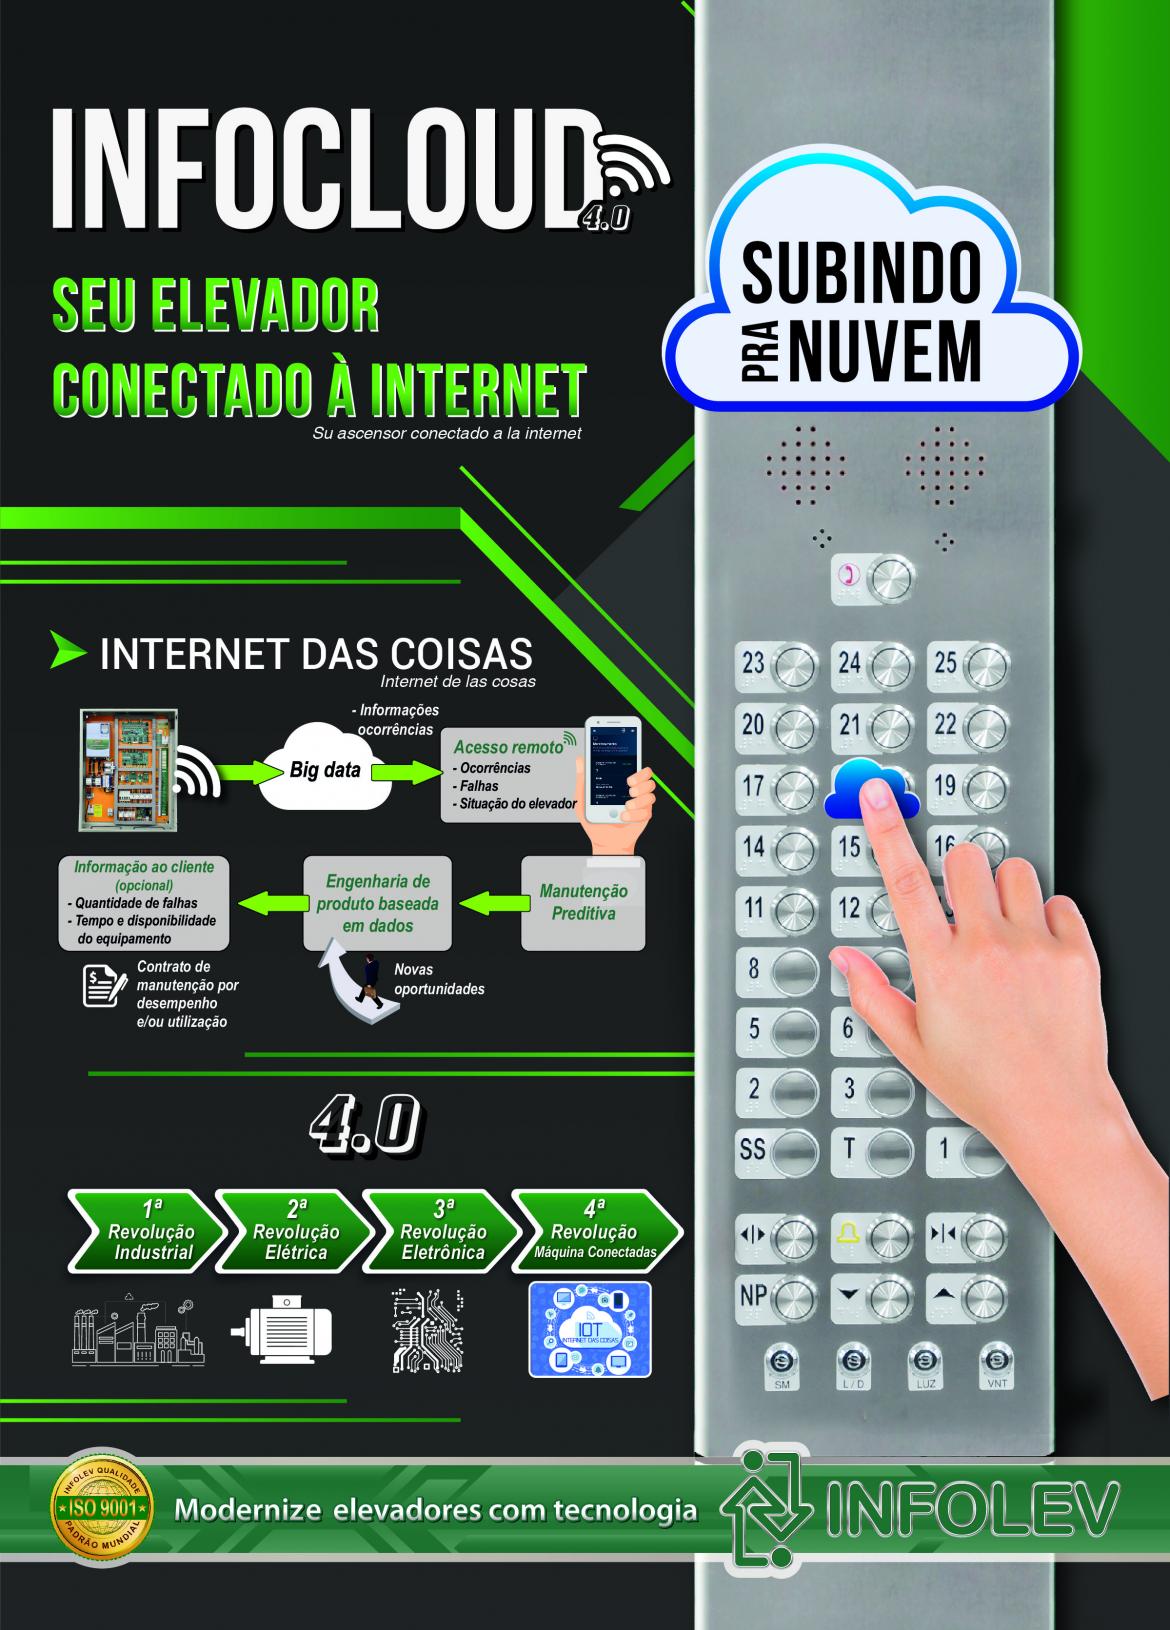 Infocloud 4.0 - Seu elevador conectado à internet!